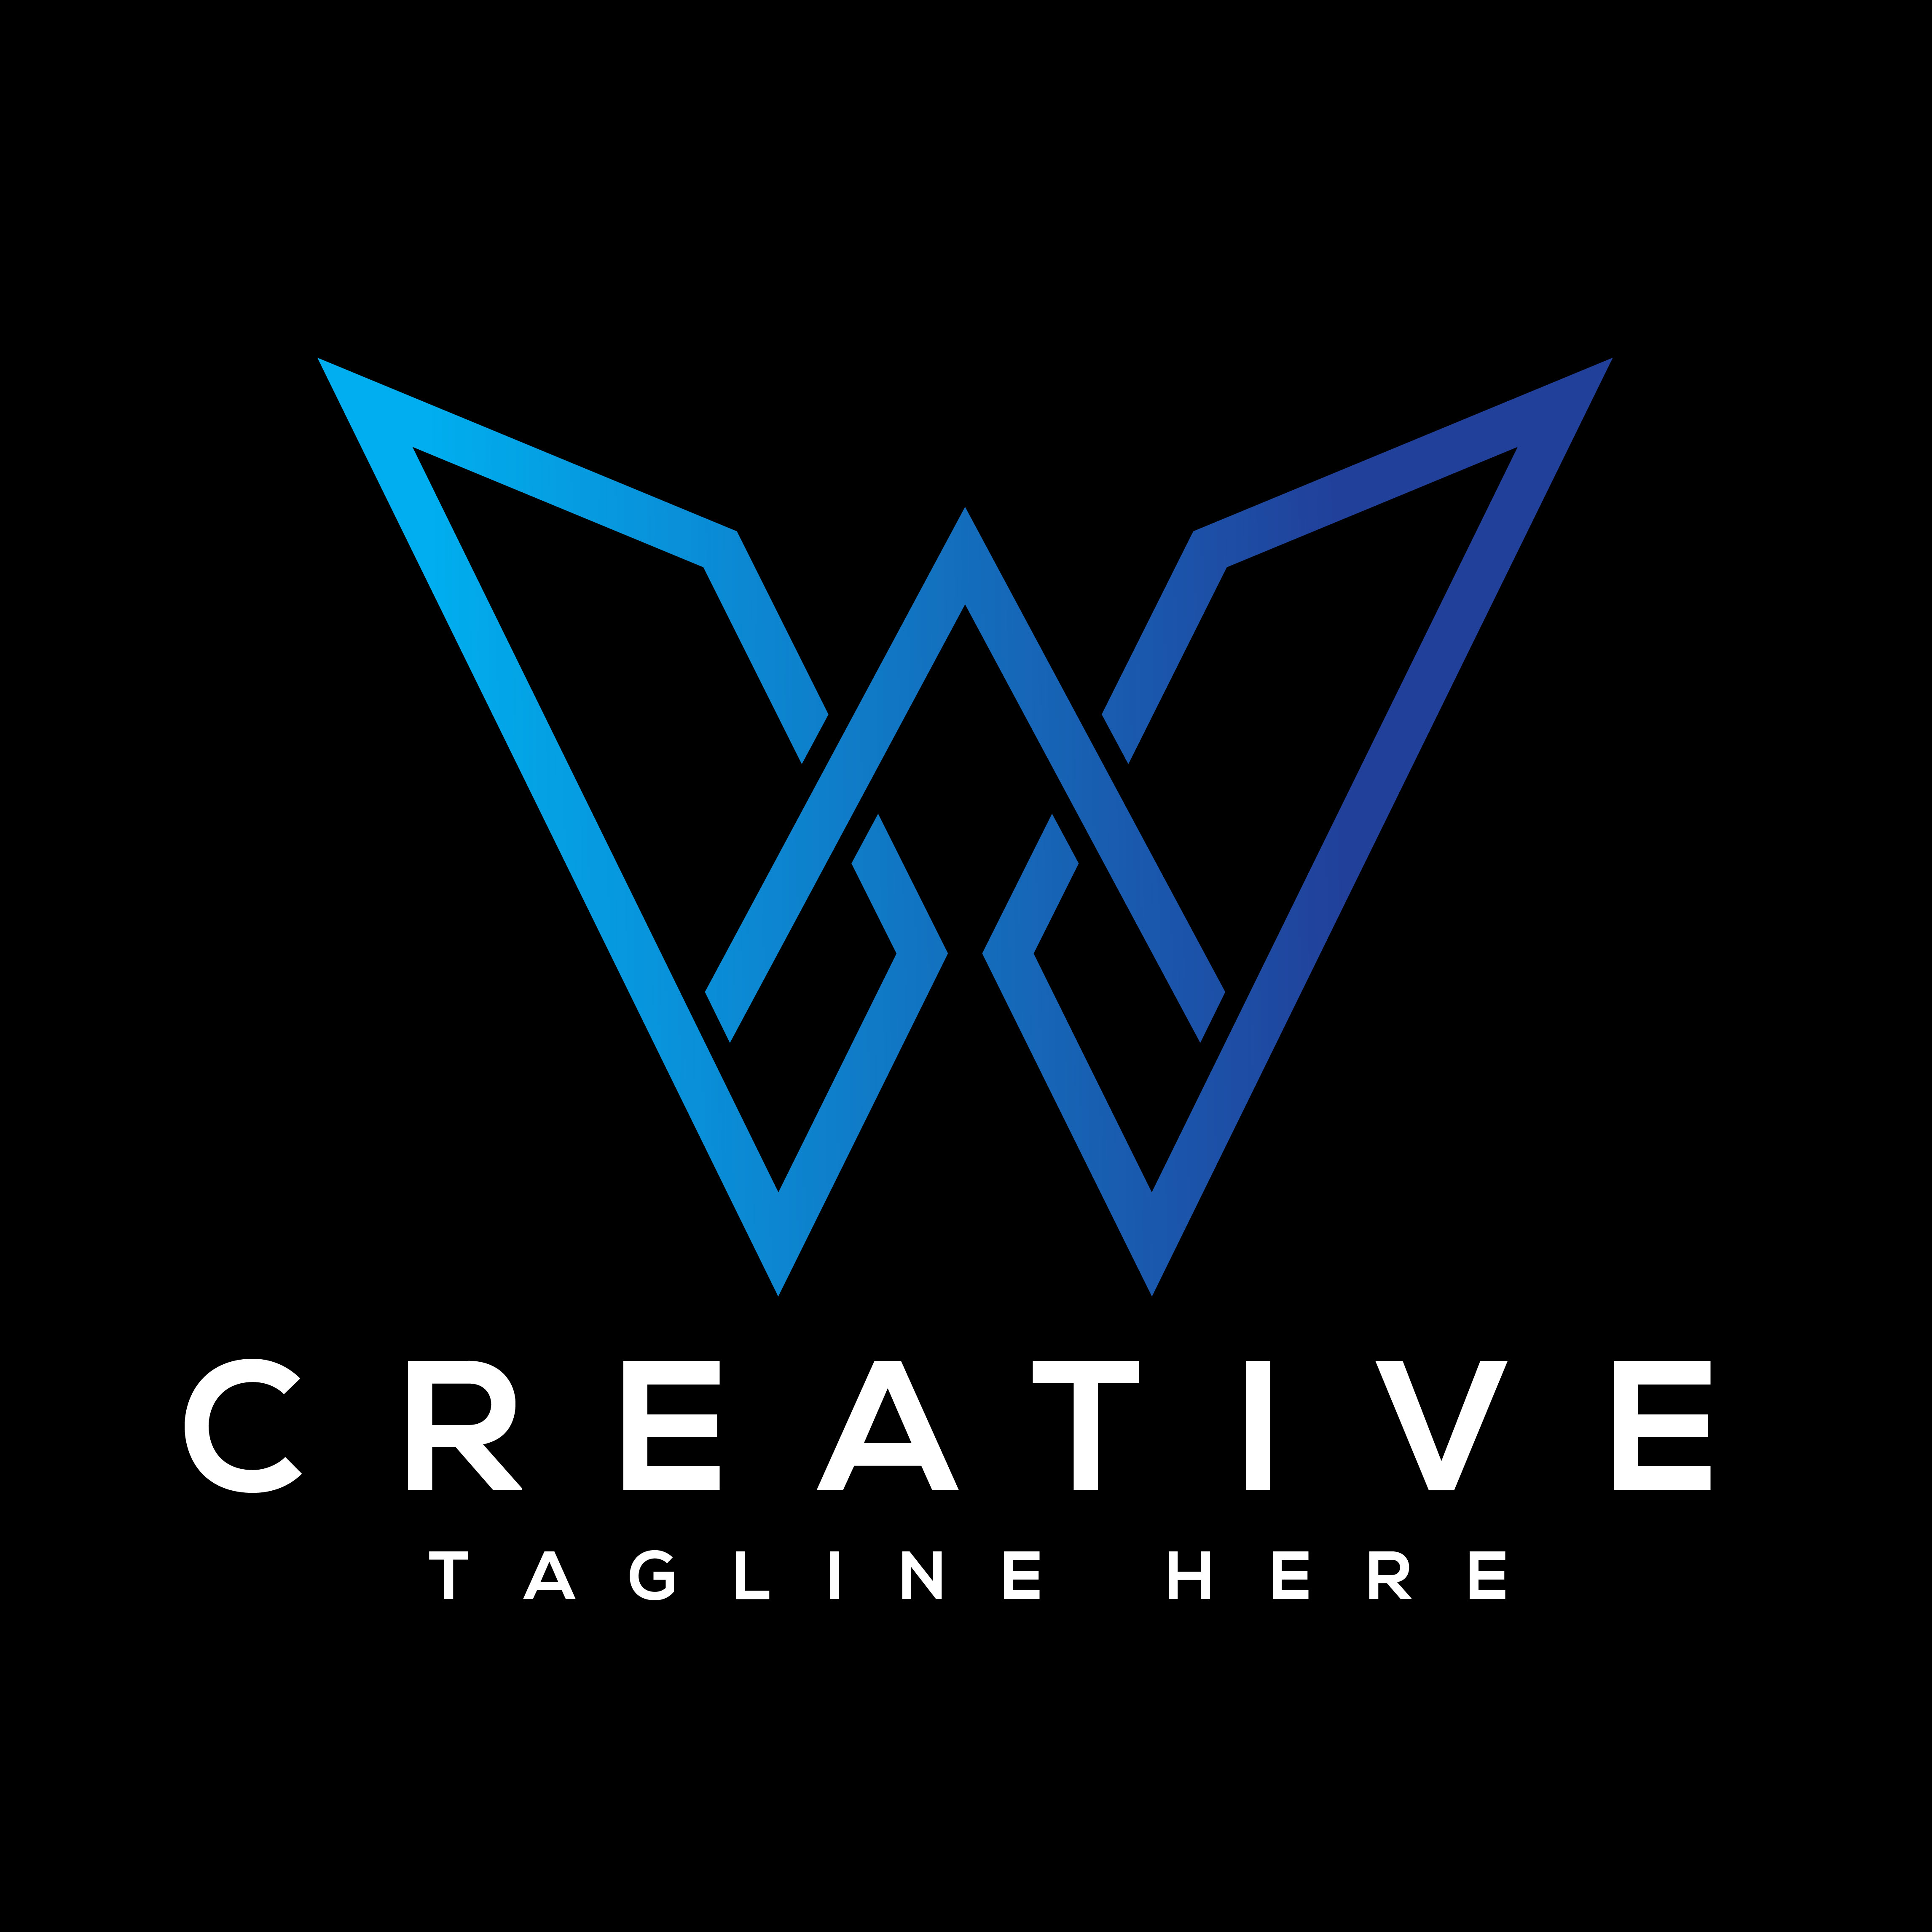 Letter W Logo Design cover image.